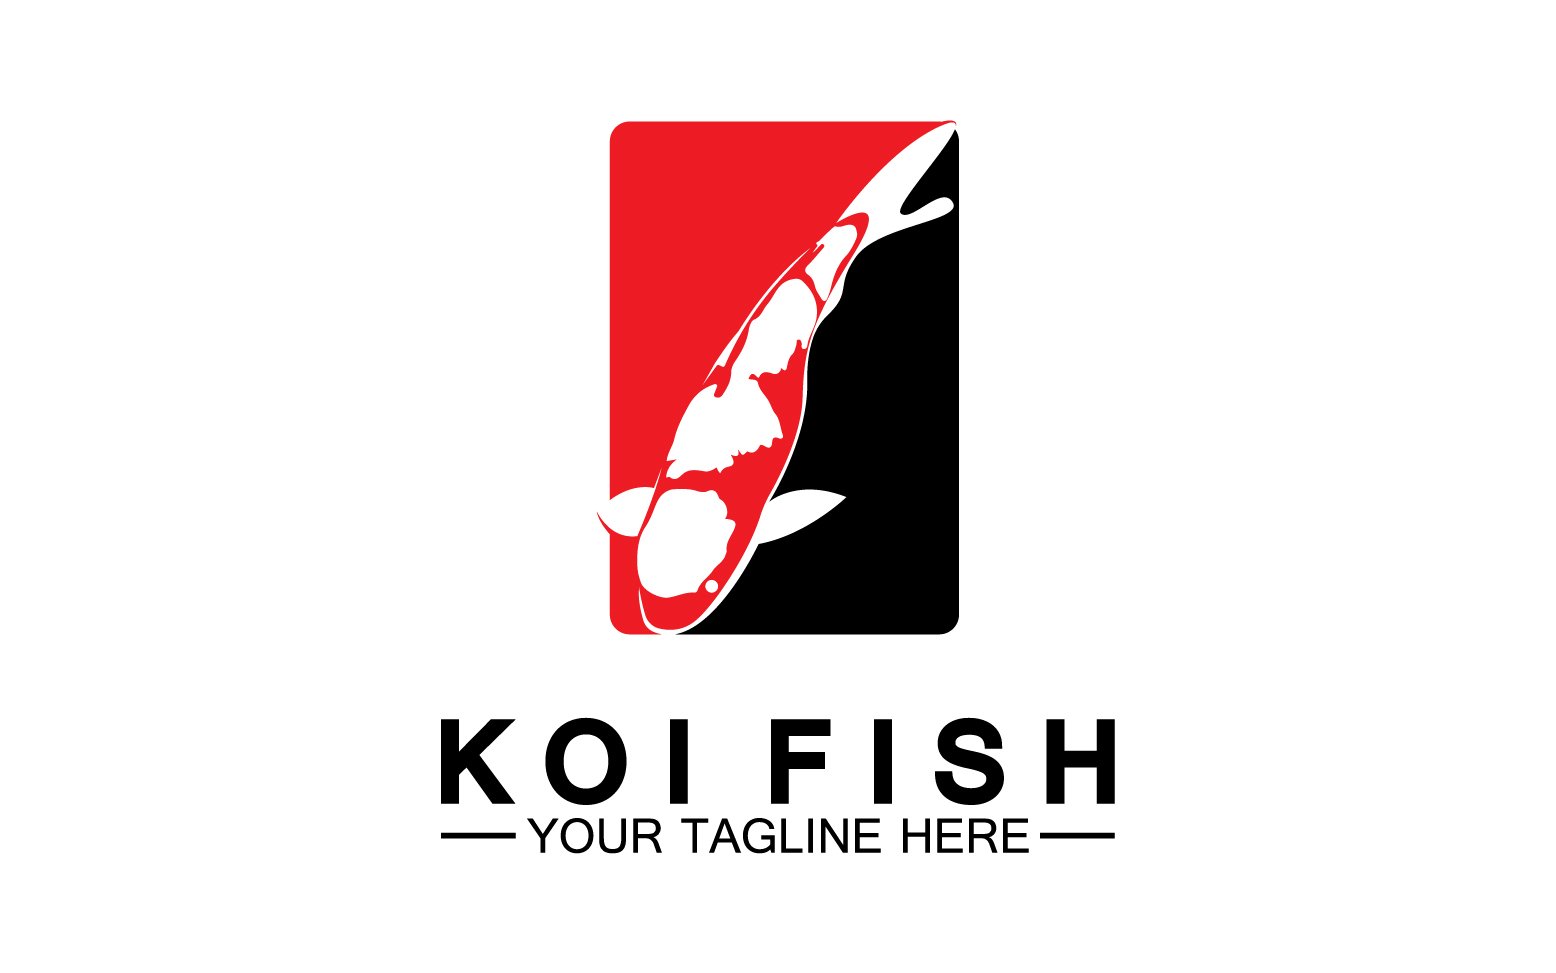 Fish koi black and red icon logo vector v36